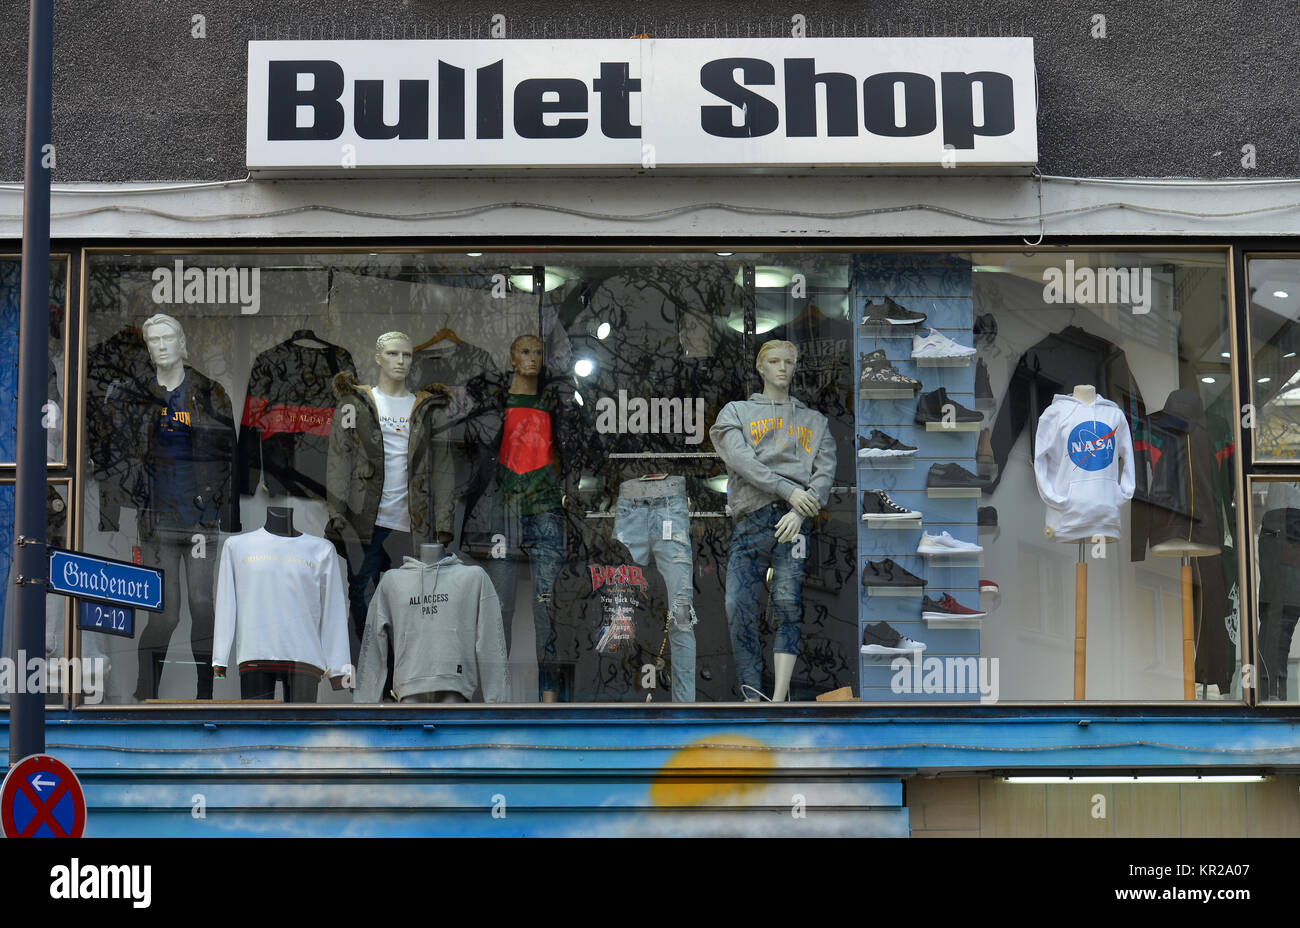 Bullet shop, Luetge Br?ckstrasse, Dortmund, del Alemania, Bullet Shop, Luetge Brueckstrasse, Nordrhein-Westfalen, Deutschland Fotografía de stock - Alamy